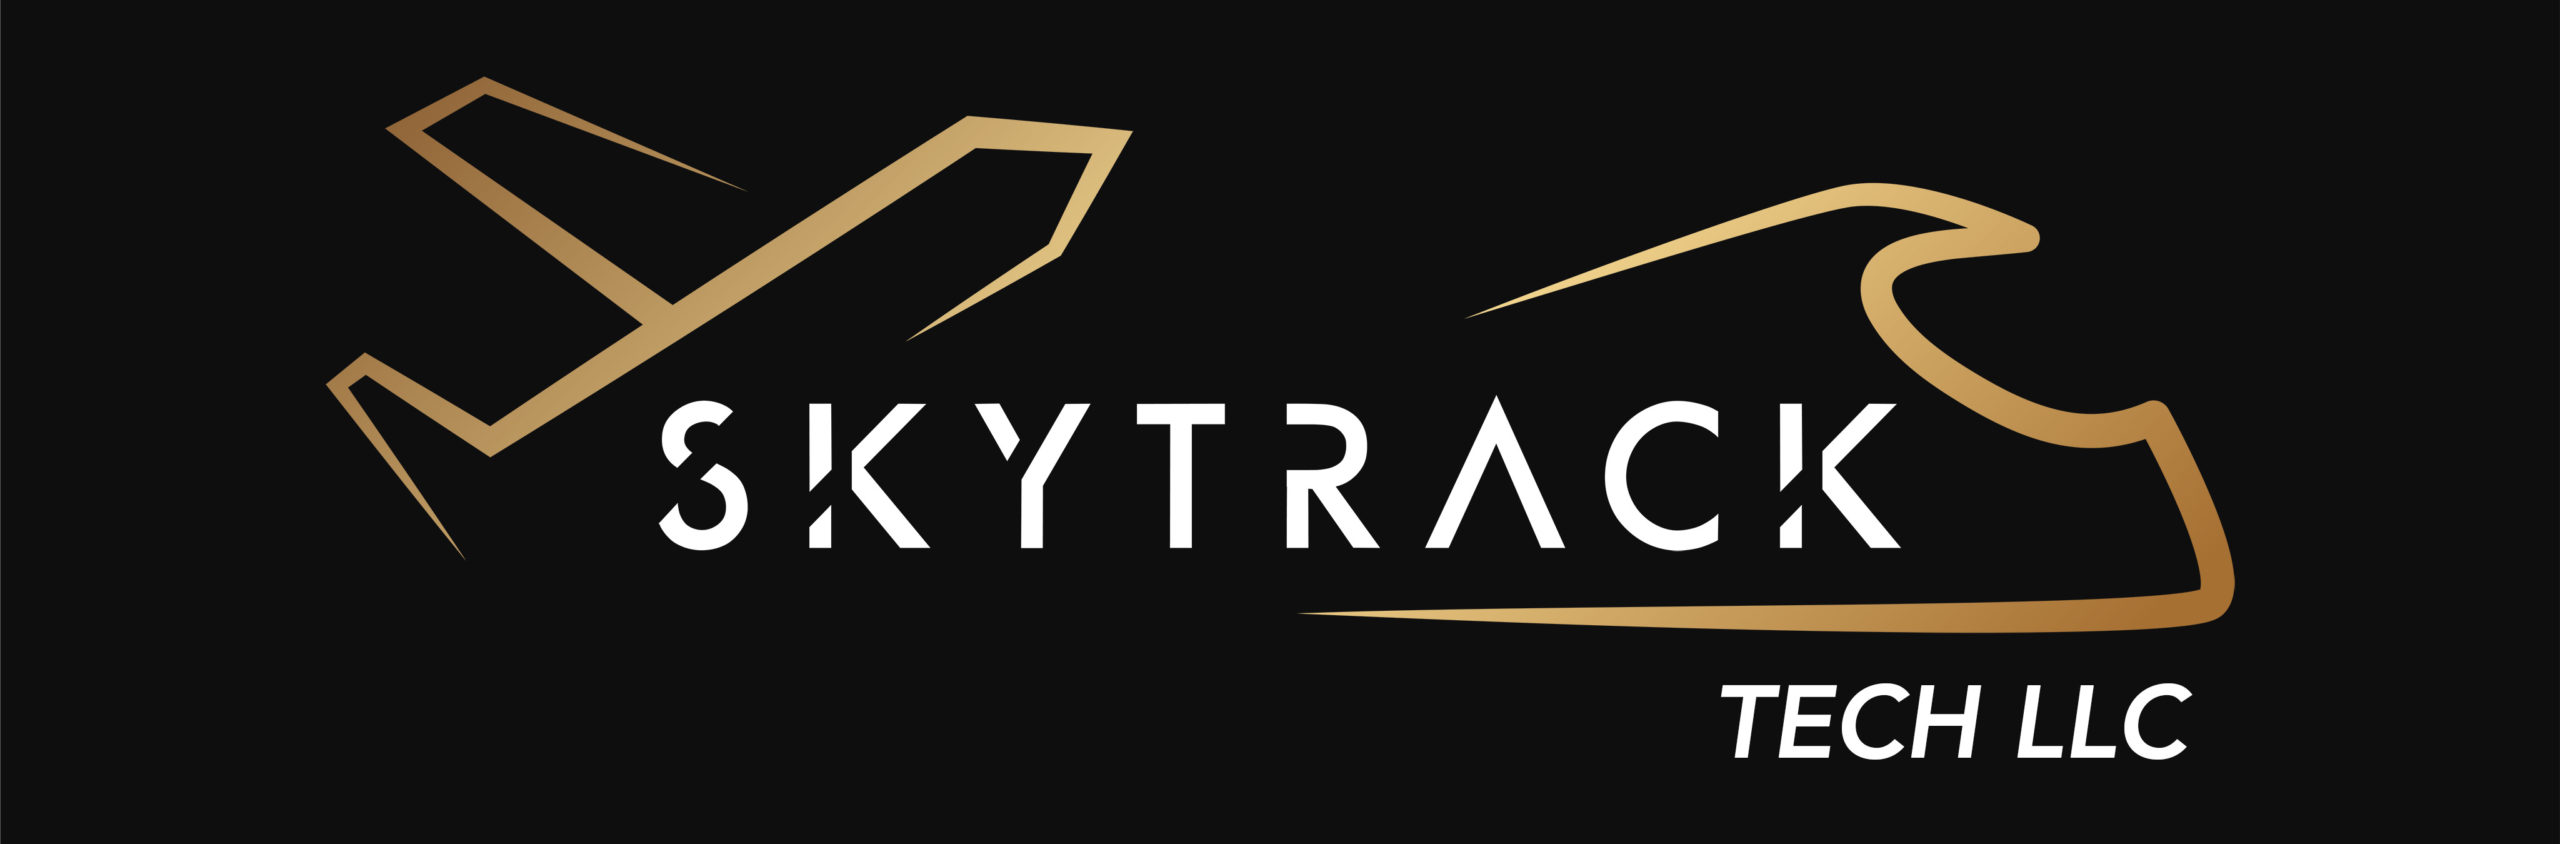 Skytrack Tech LLC